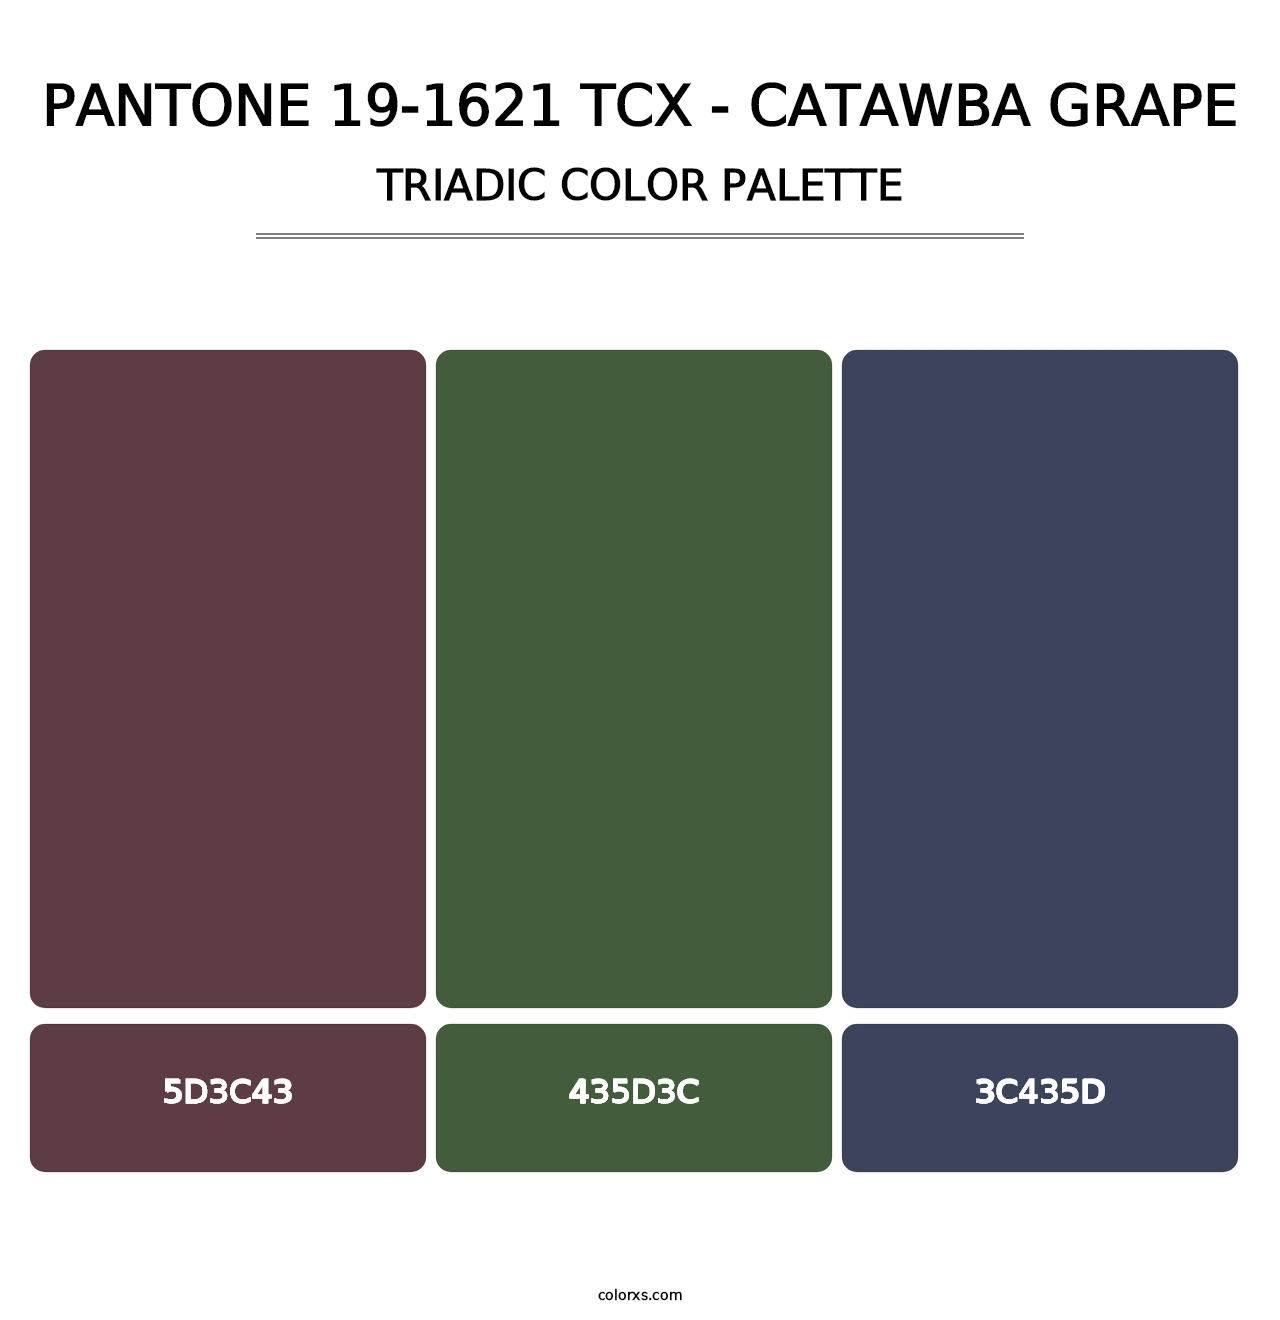 PANTONE 19-1621 TCX - Catawba Grape - Triadic Color Palette